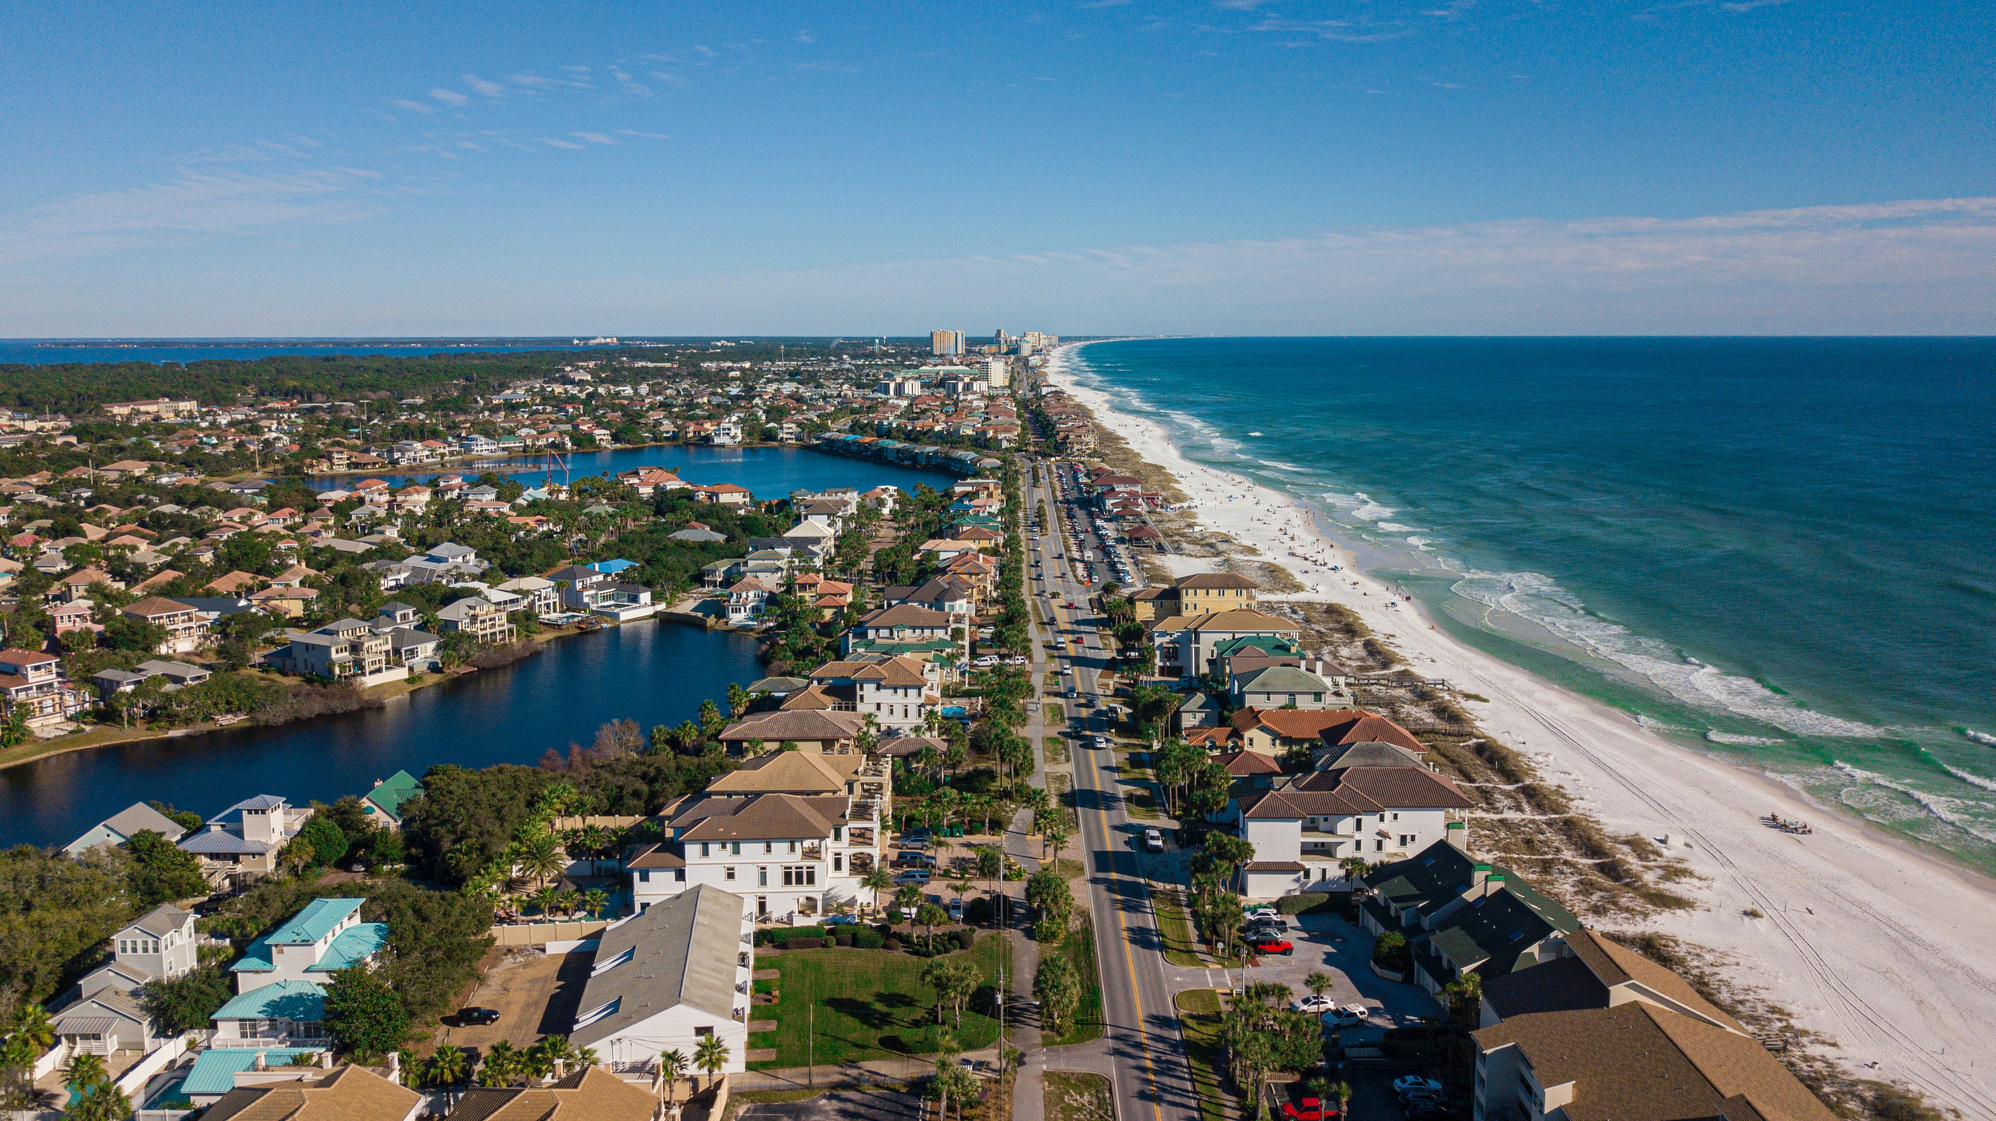 Aerial View of Houses Near A Beach Under Blue Sky